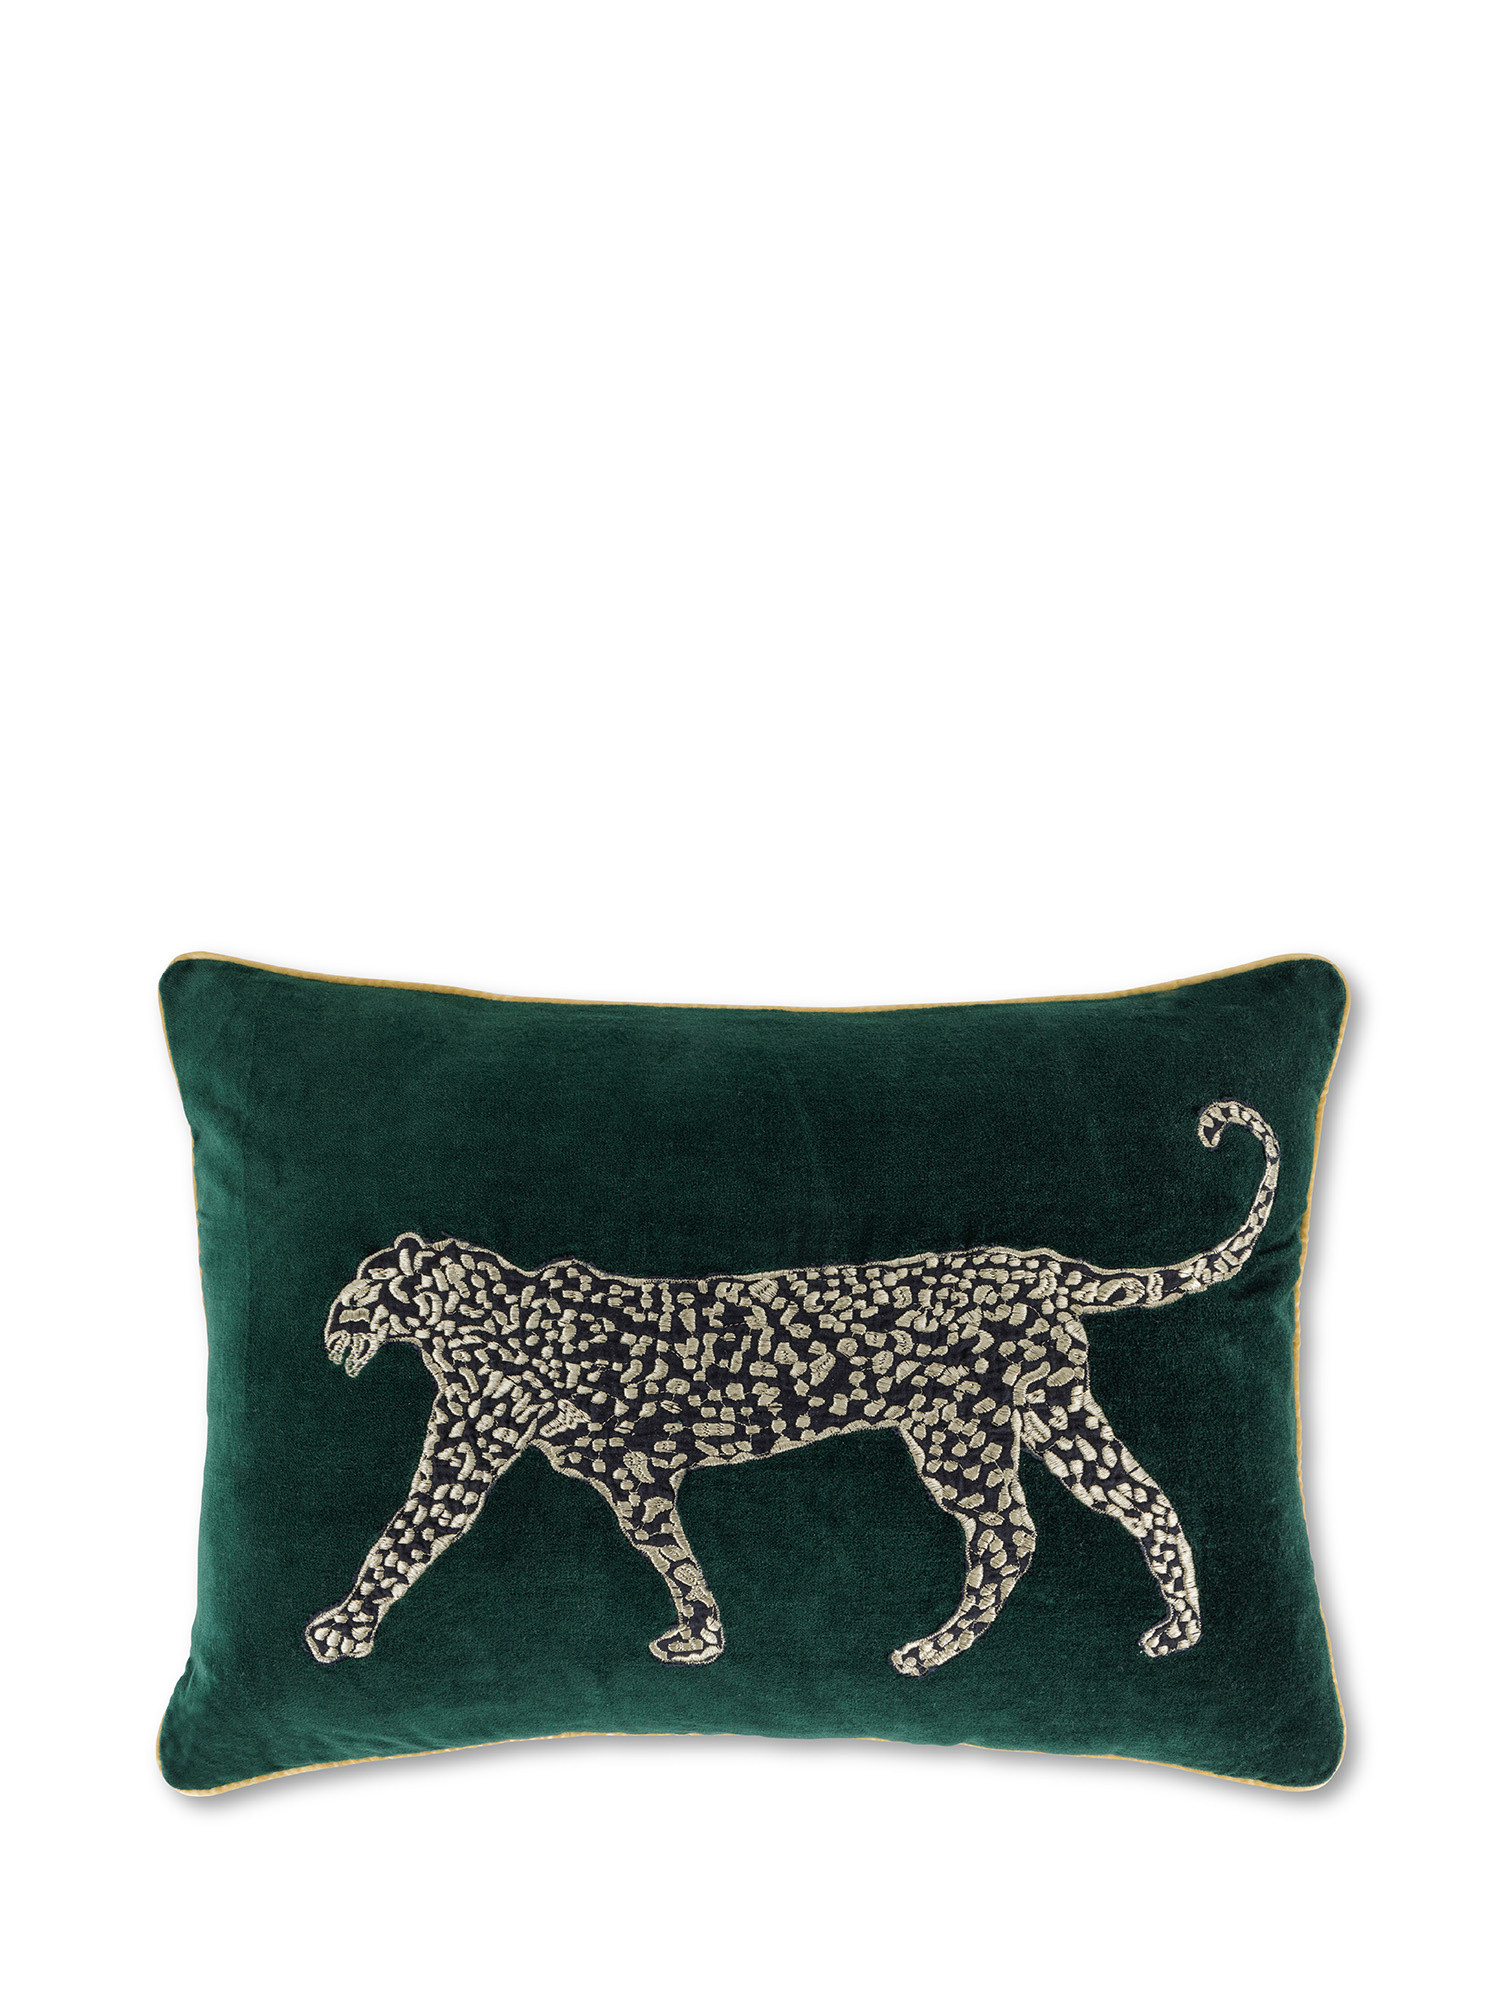 Leopard embroidered velvet cushion 35x50 cm, Green, large image number 0